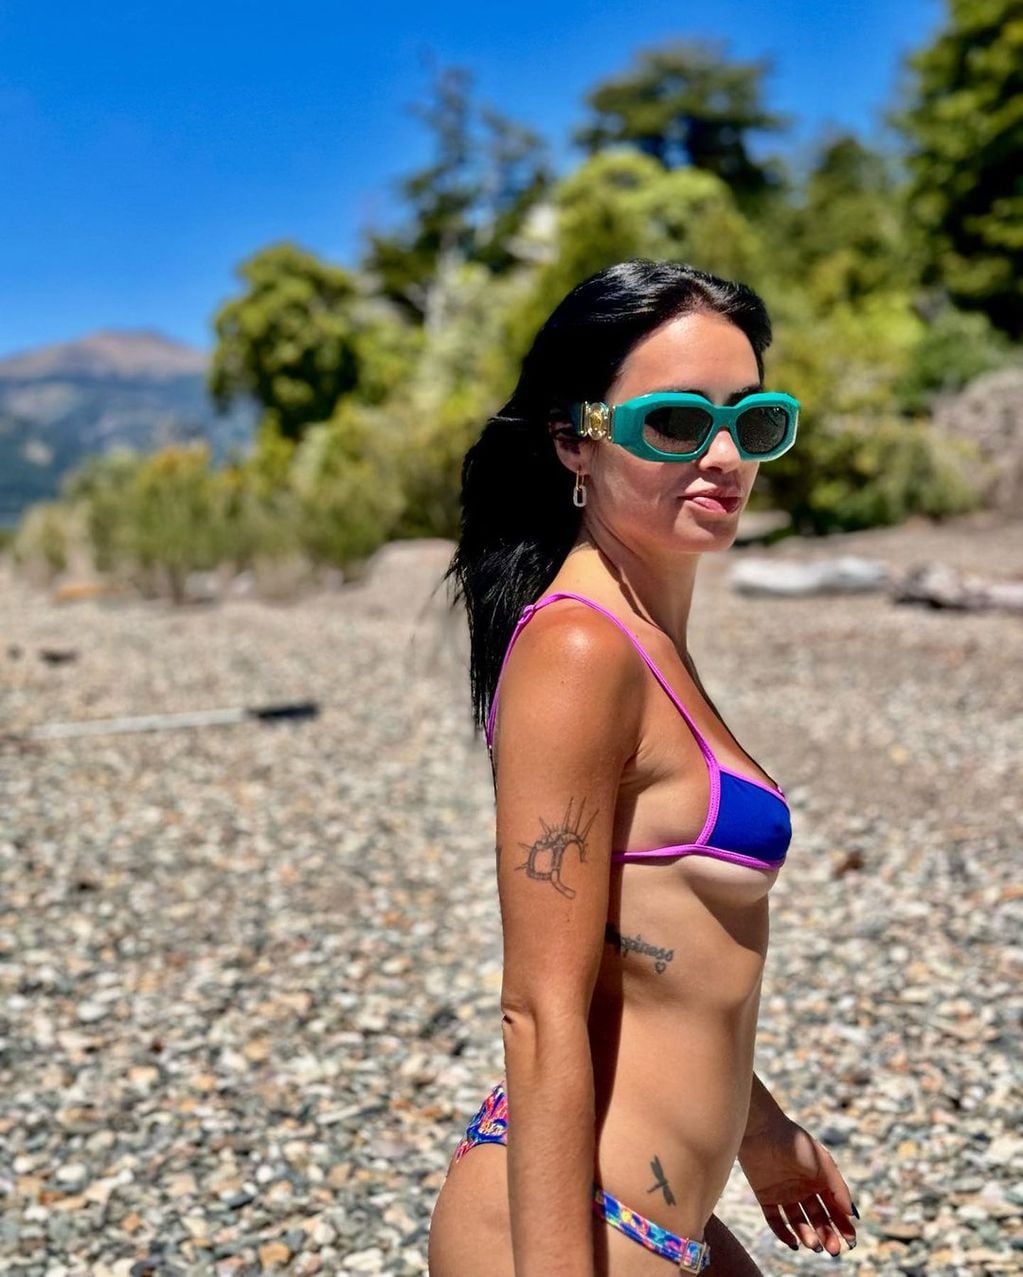 Lali Espósito impactó con su bikini. Gentileza Instagram.